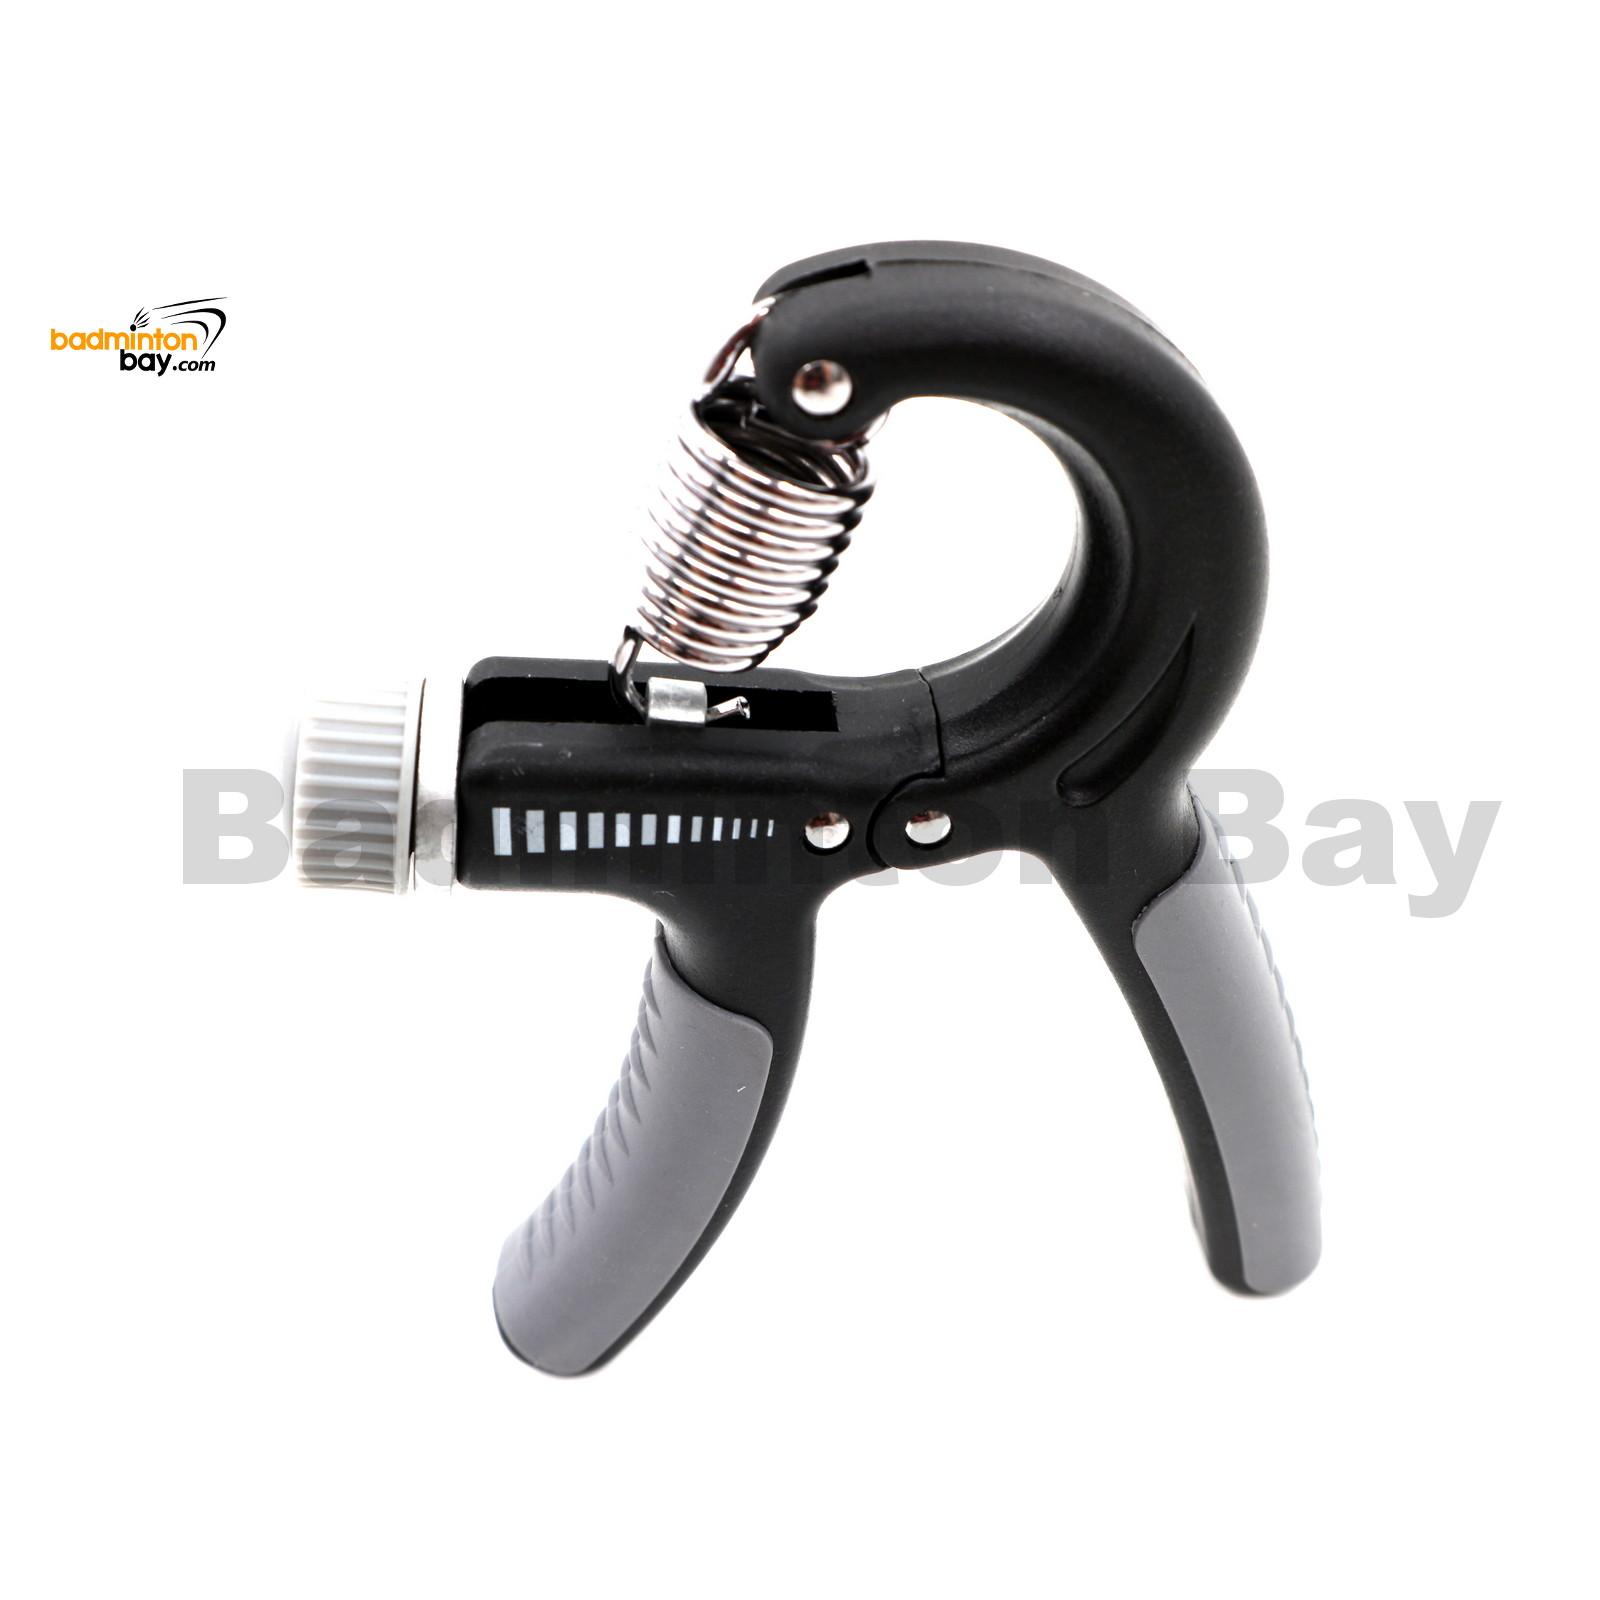 Kettler Adjustable Spring Hand Grip Tool 0816-000 For Strengthening Exercise